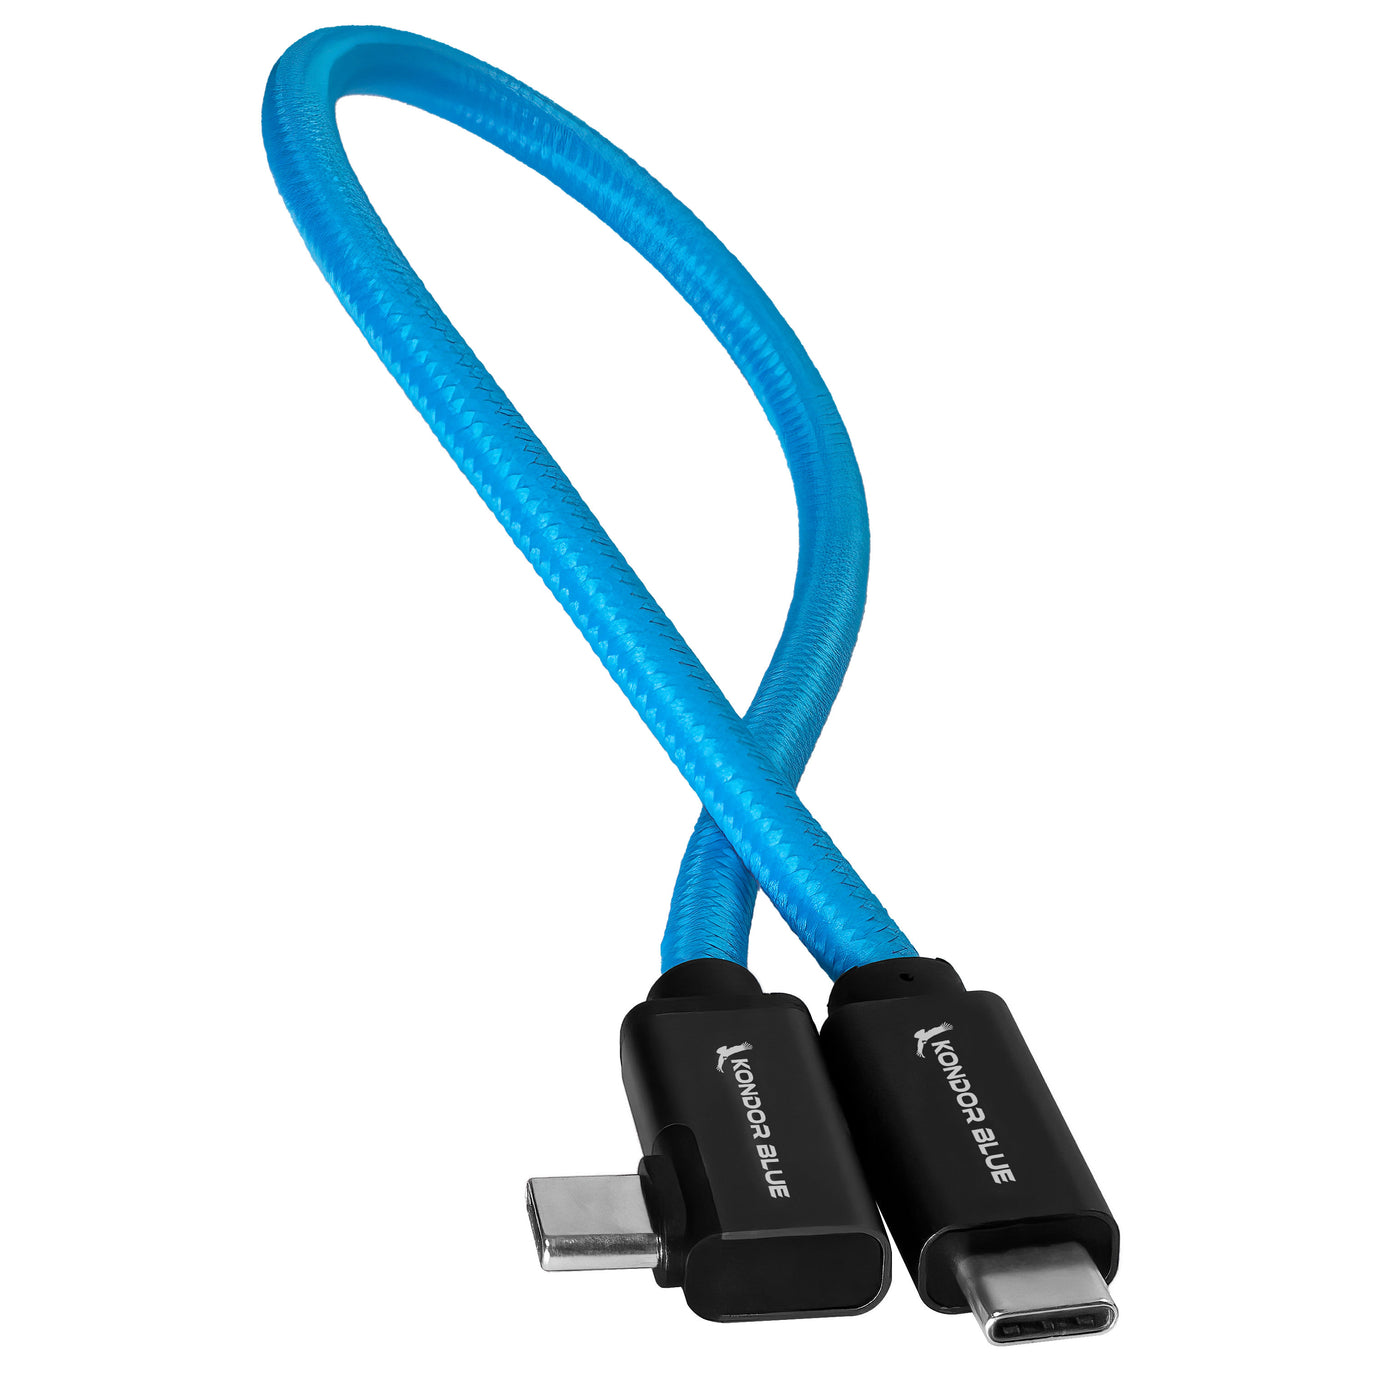 Kondor Blue Cable USB-C a USB-C 3.1 GEN 2 100 W 10Gbps Thunderbolt 3